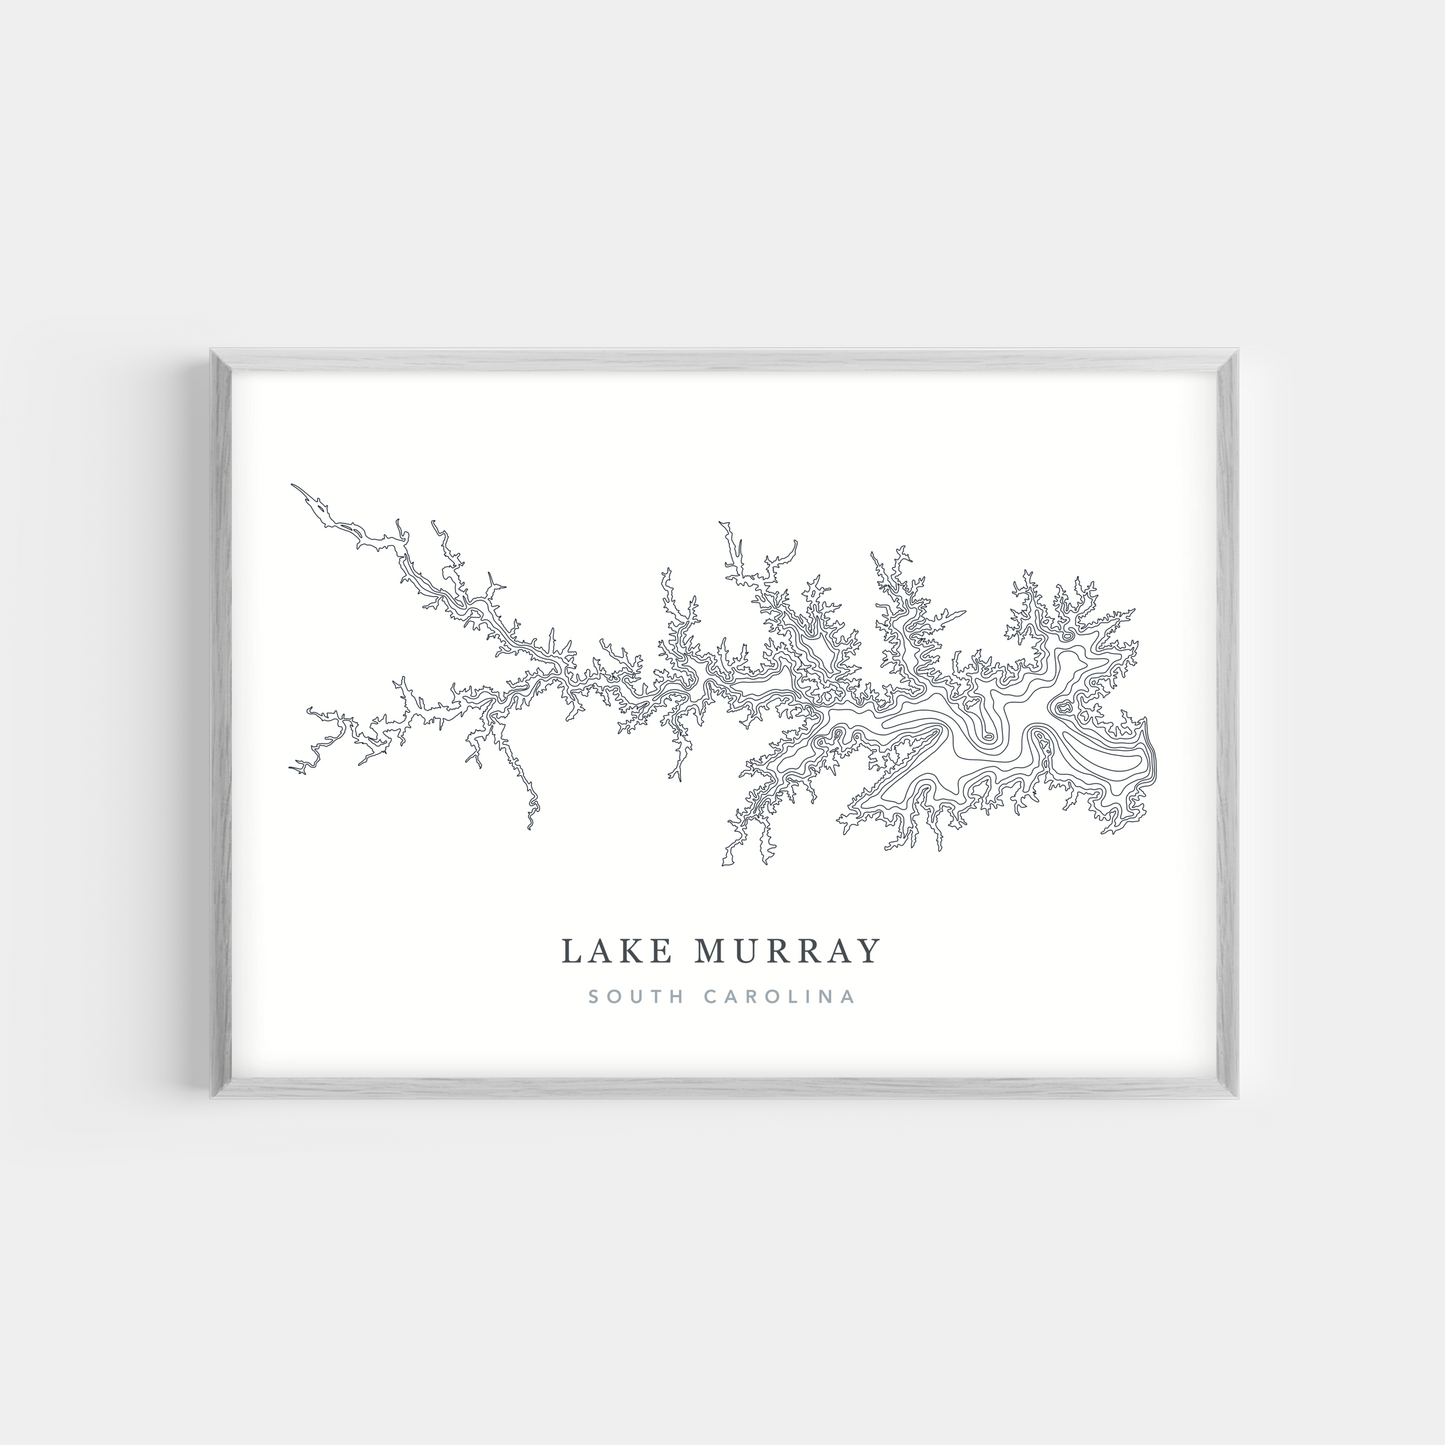 Lake Murray, South Carolina | Photo Print